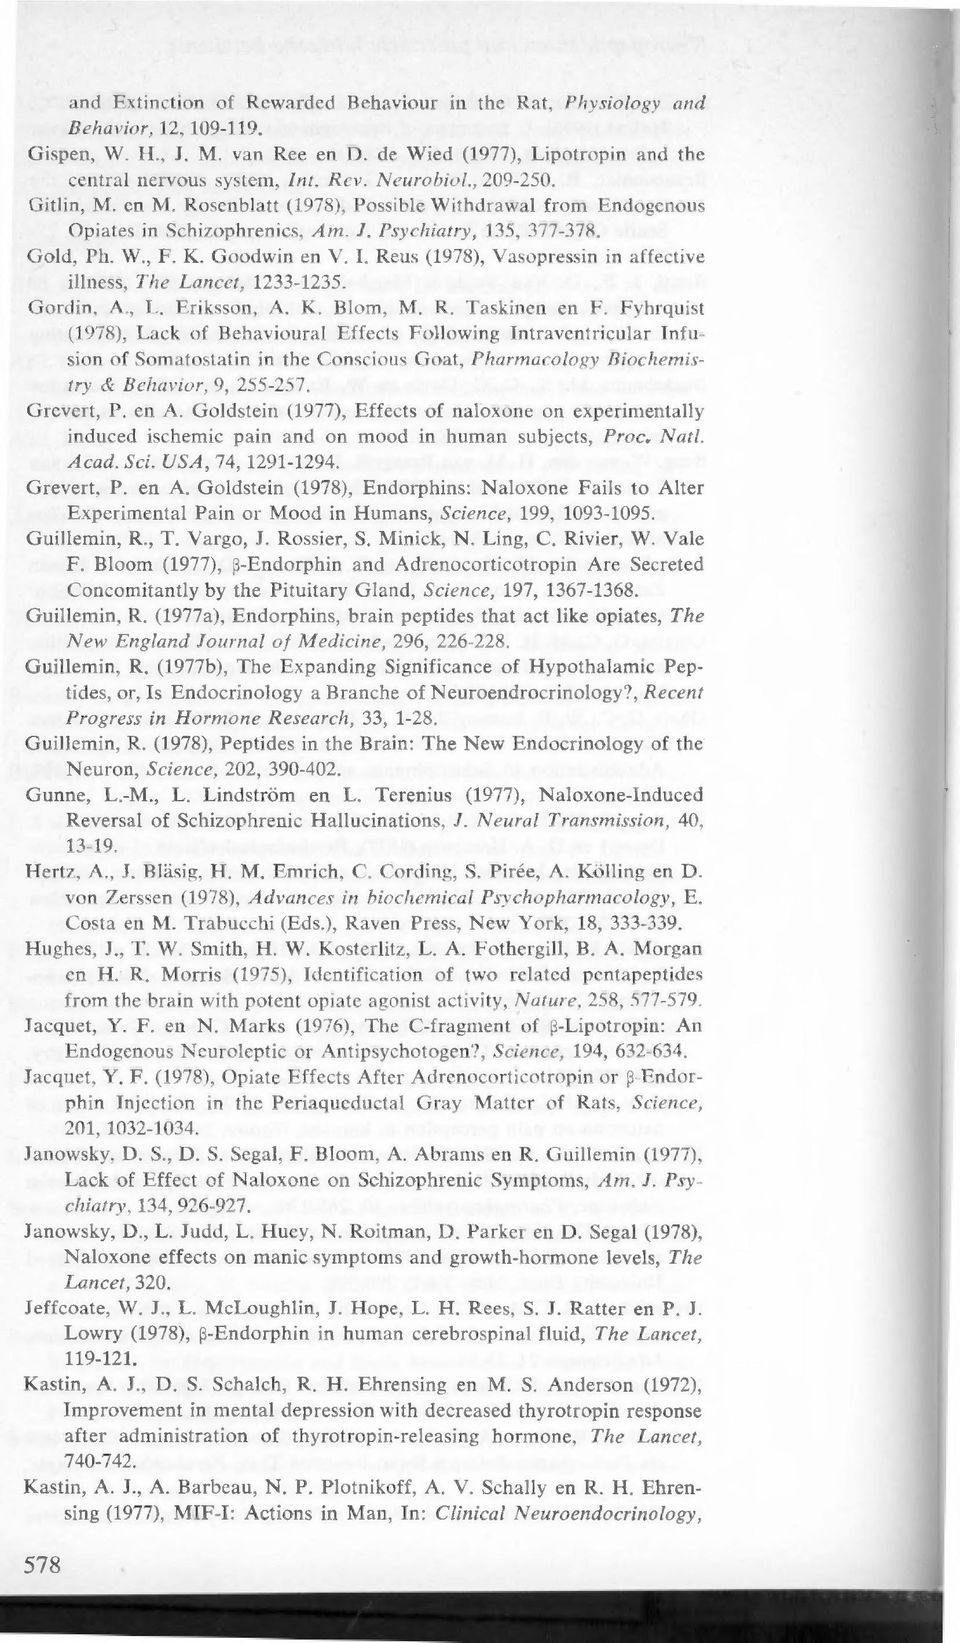 Reus (1978), Vasopressin in affective illness, The Lancet, 1233-1235. Gordin, A., L. Eriksson, A. K. Blom, M. R. Taskinen en F.